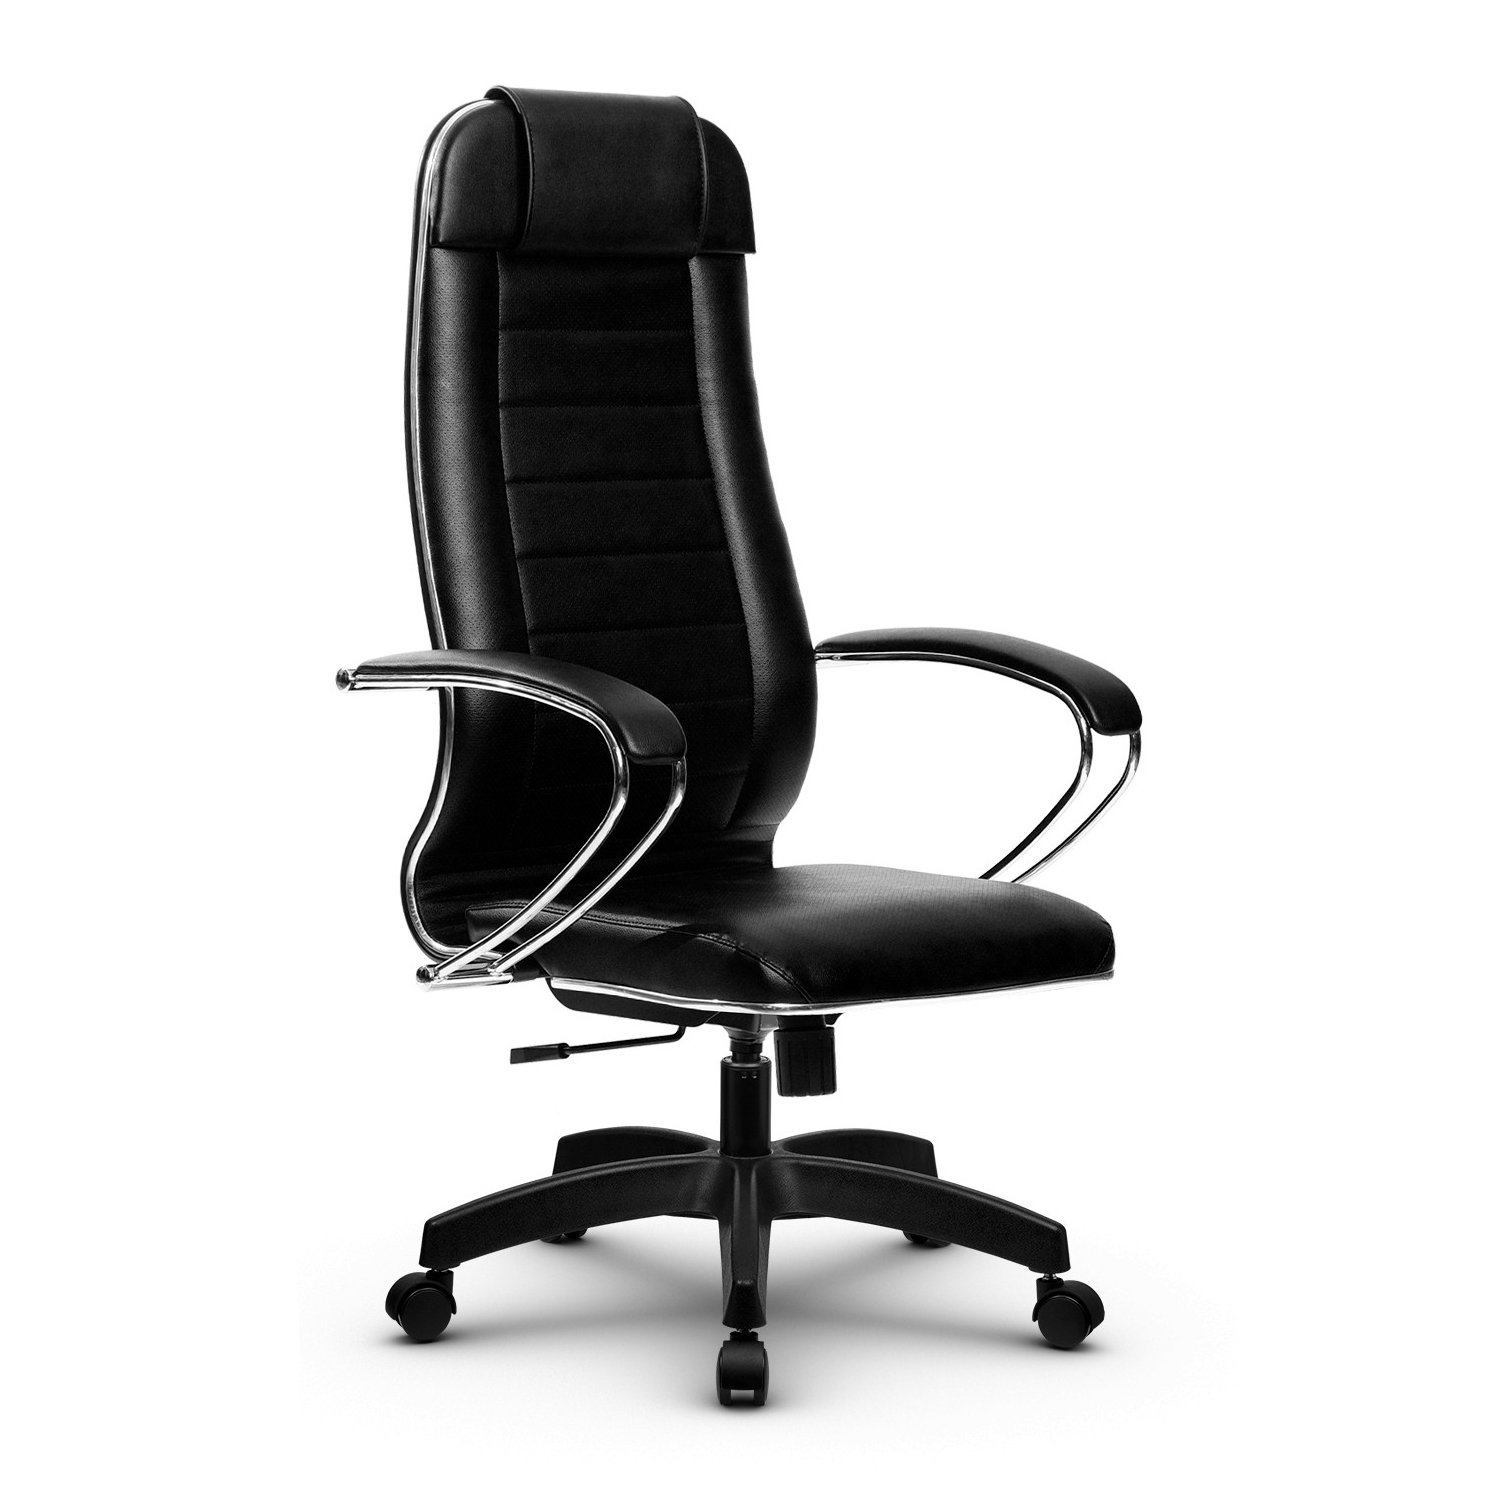 Кресло м 903 софт pl moderno 02 серый